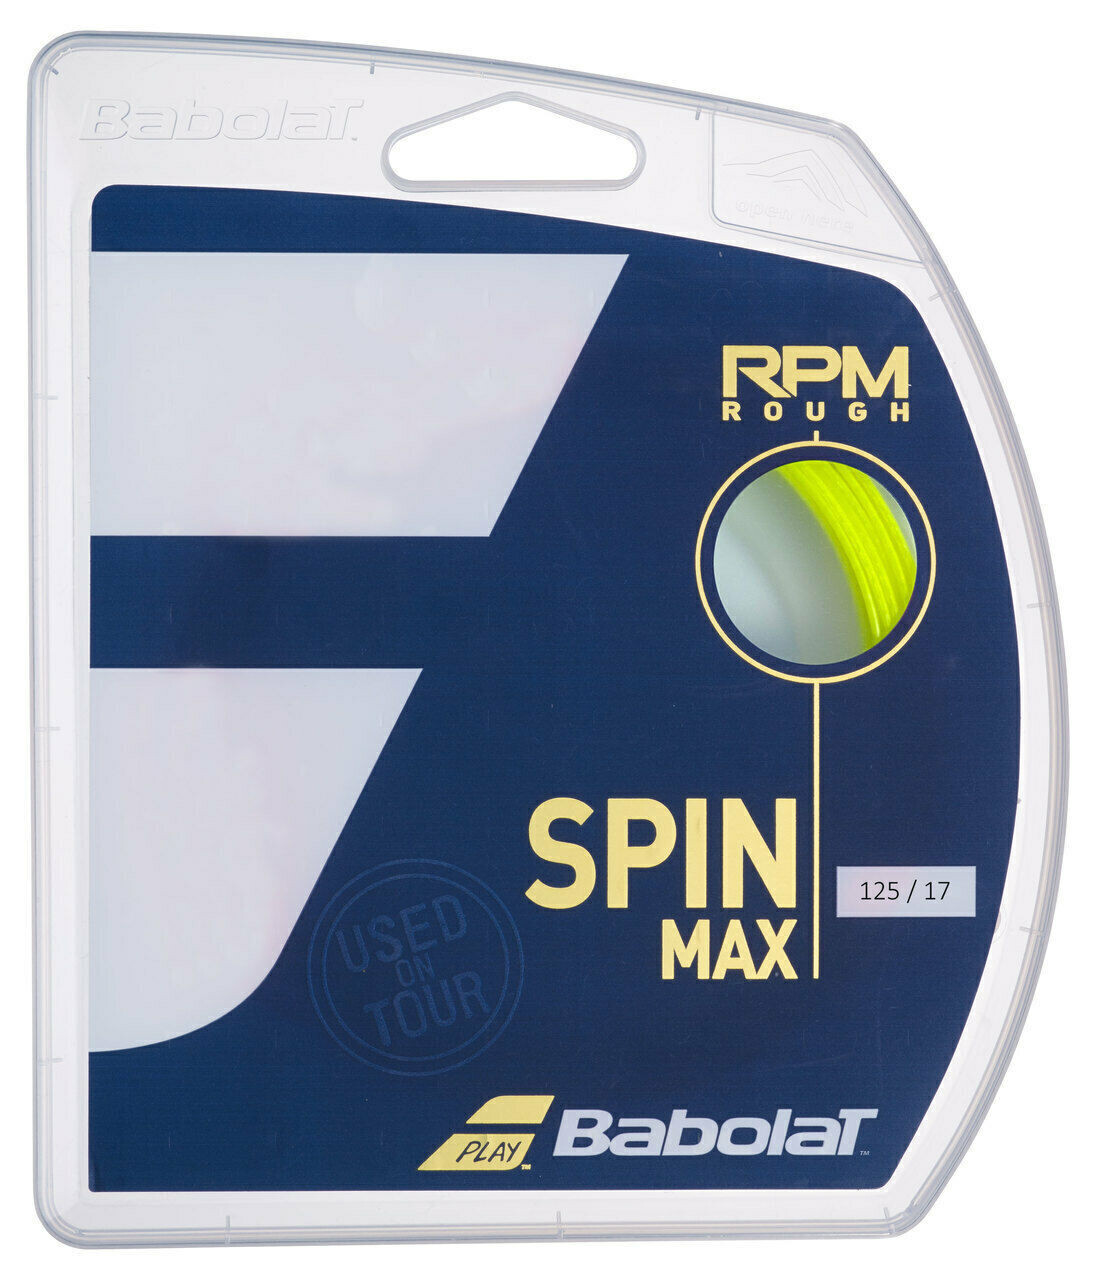 Babolat RPM Rough 125 Tennis String Set - Yellow